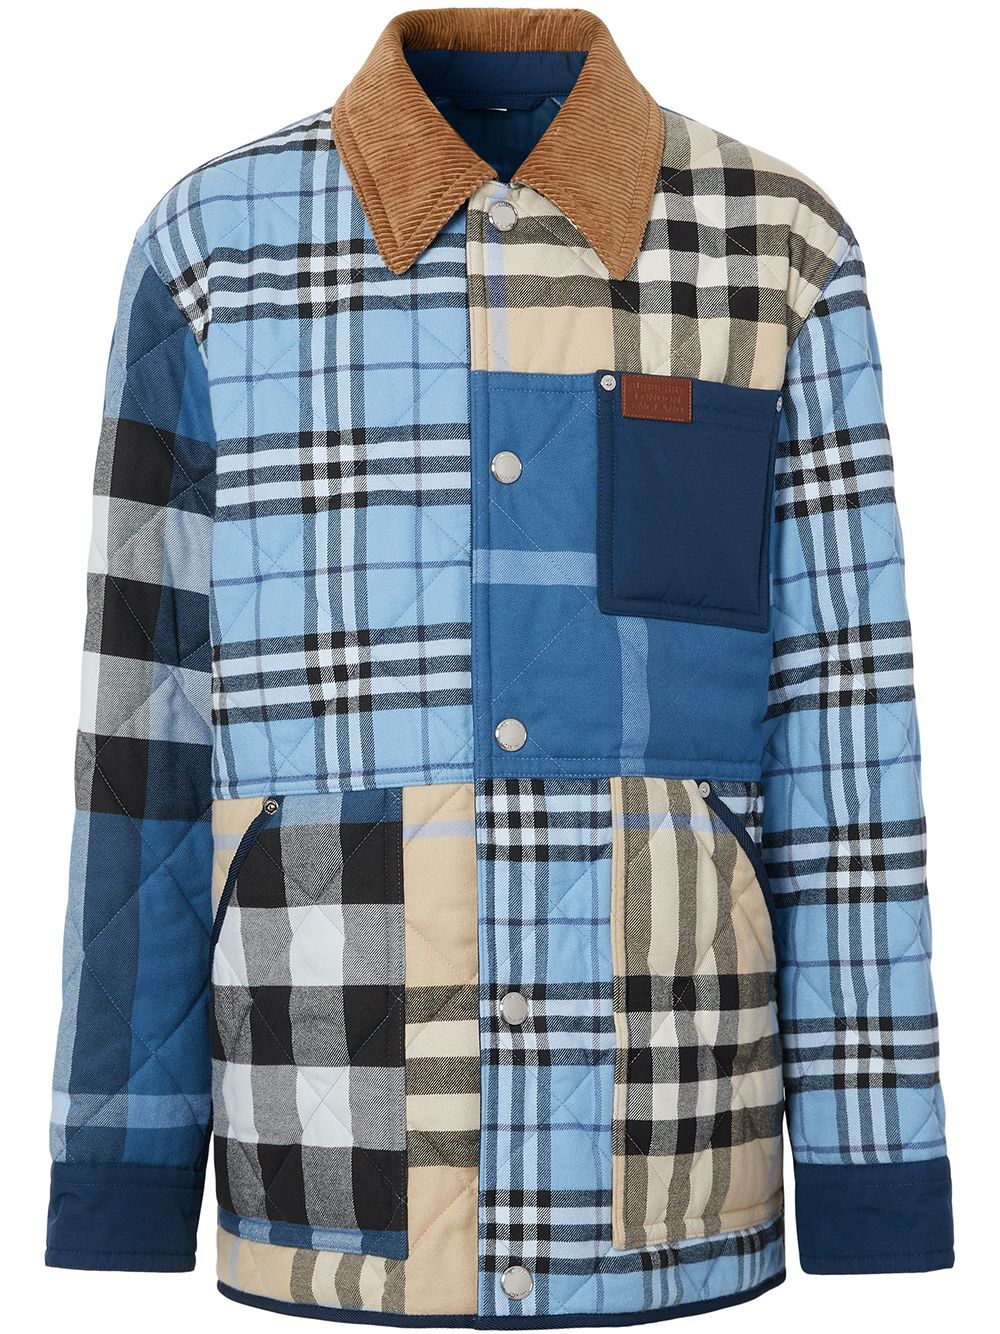 Burberry patchwork check shirt jacket